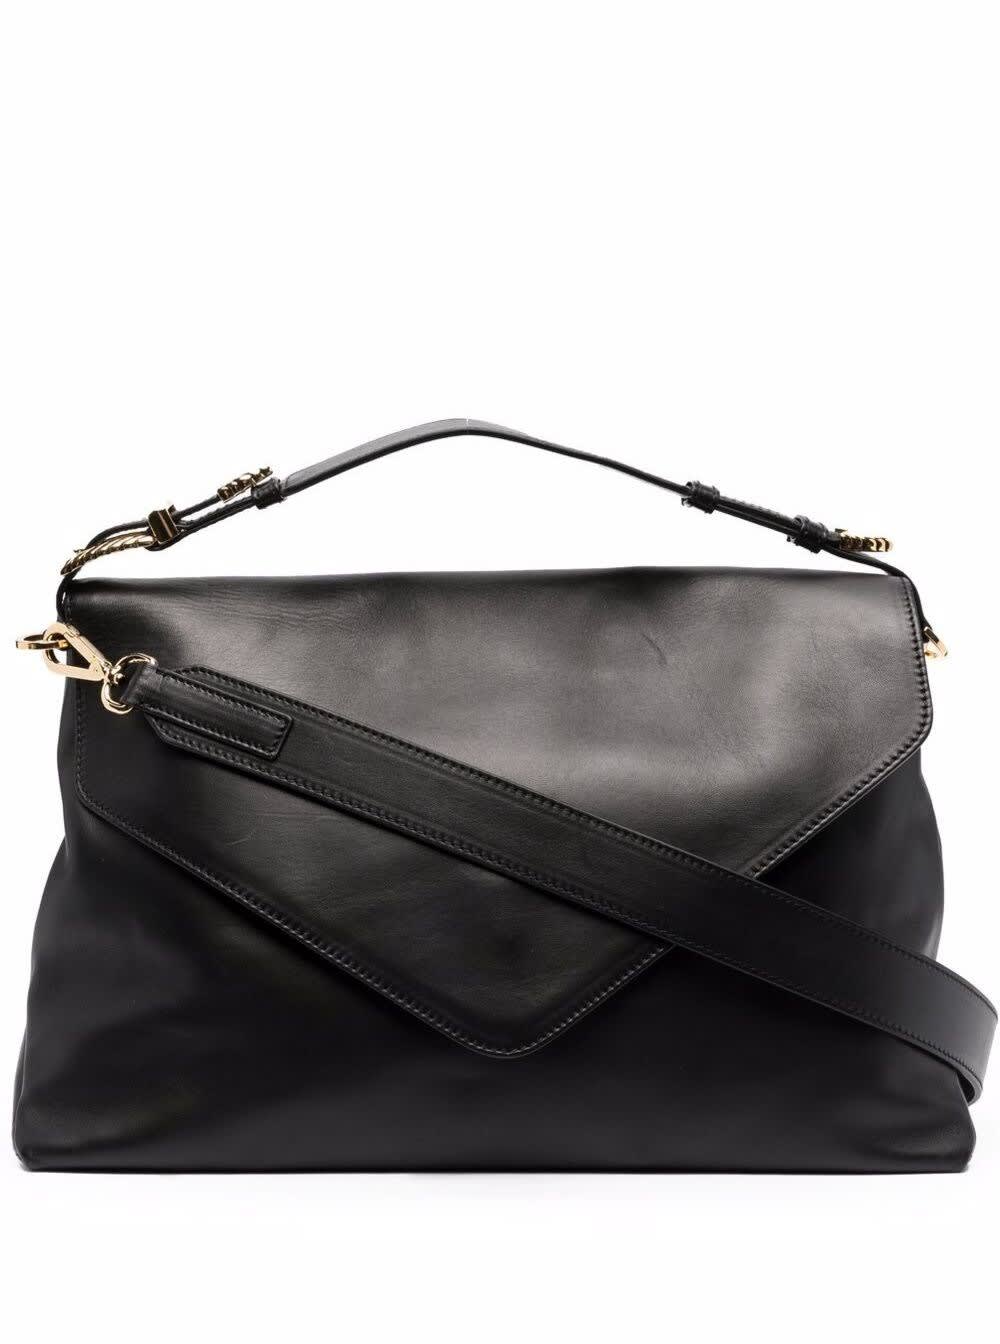 Alberta Ferretti Black Leather Crossbody Bag